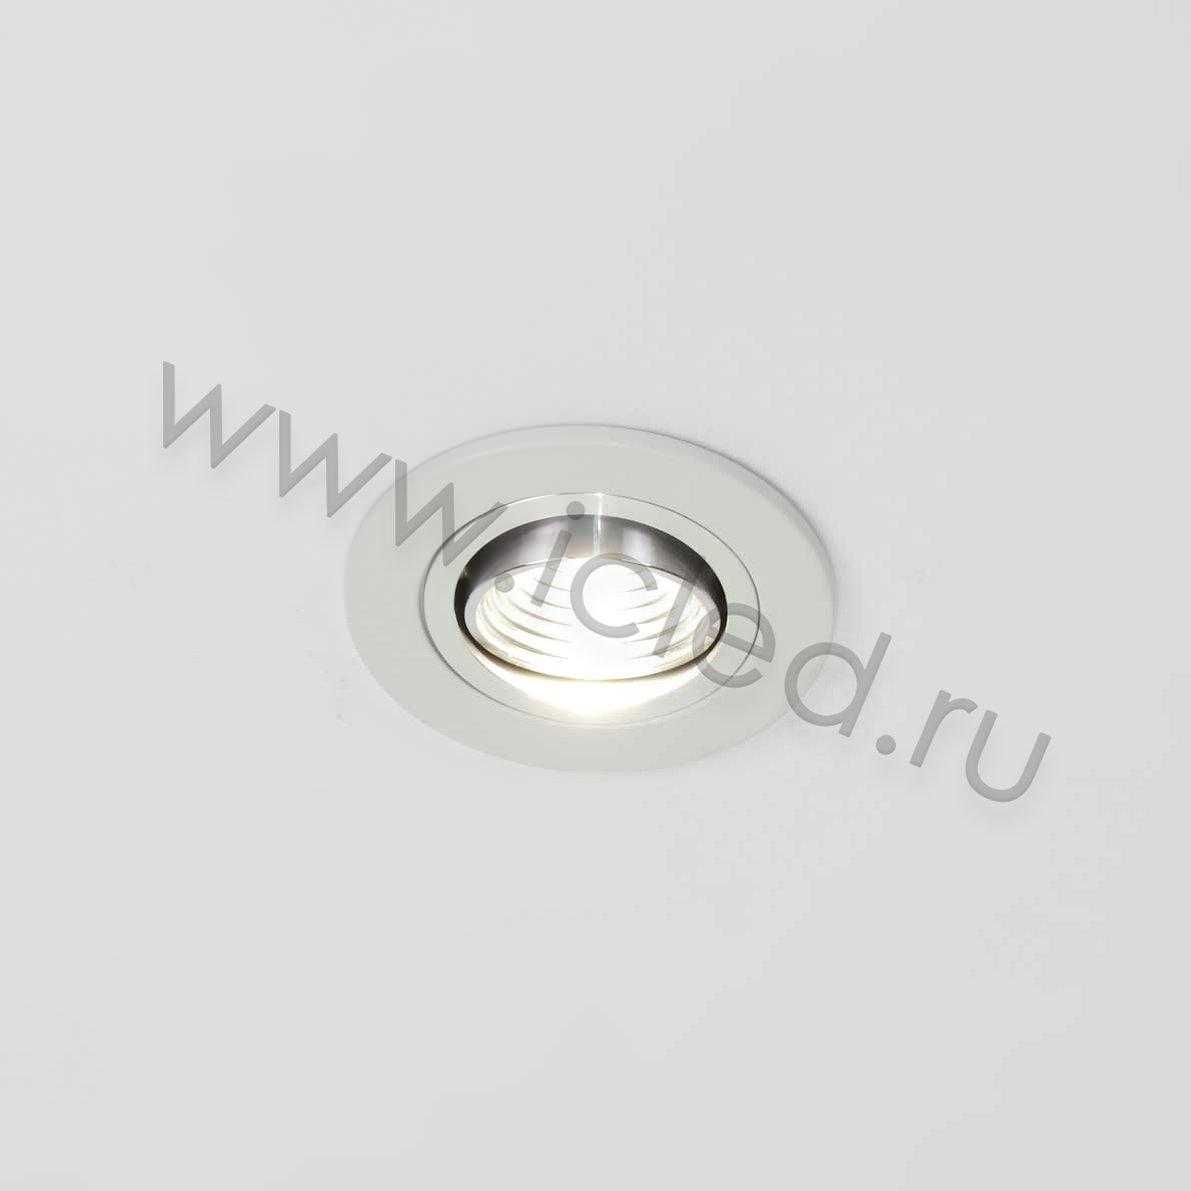 Светодиодные светильники Светодиодный светильник встраиваемый 65 Series white housing BW102 (3W,220V,day white)